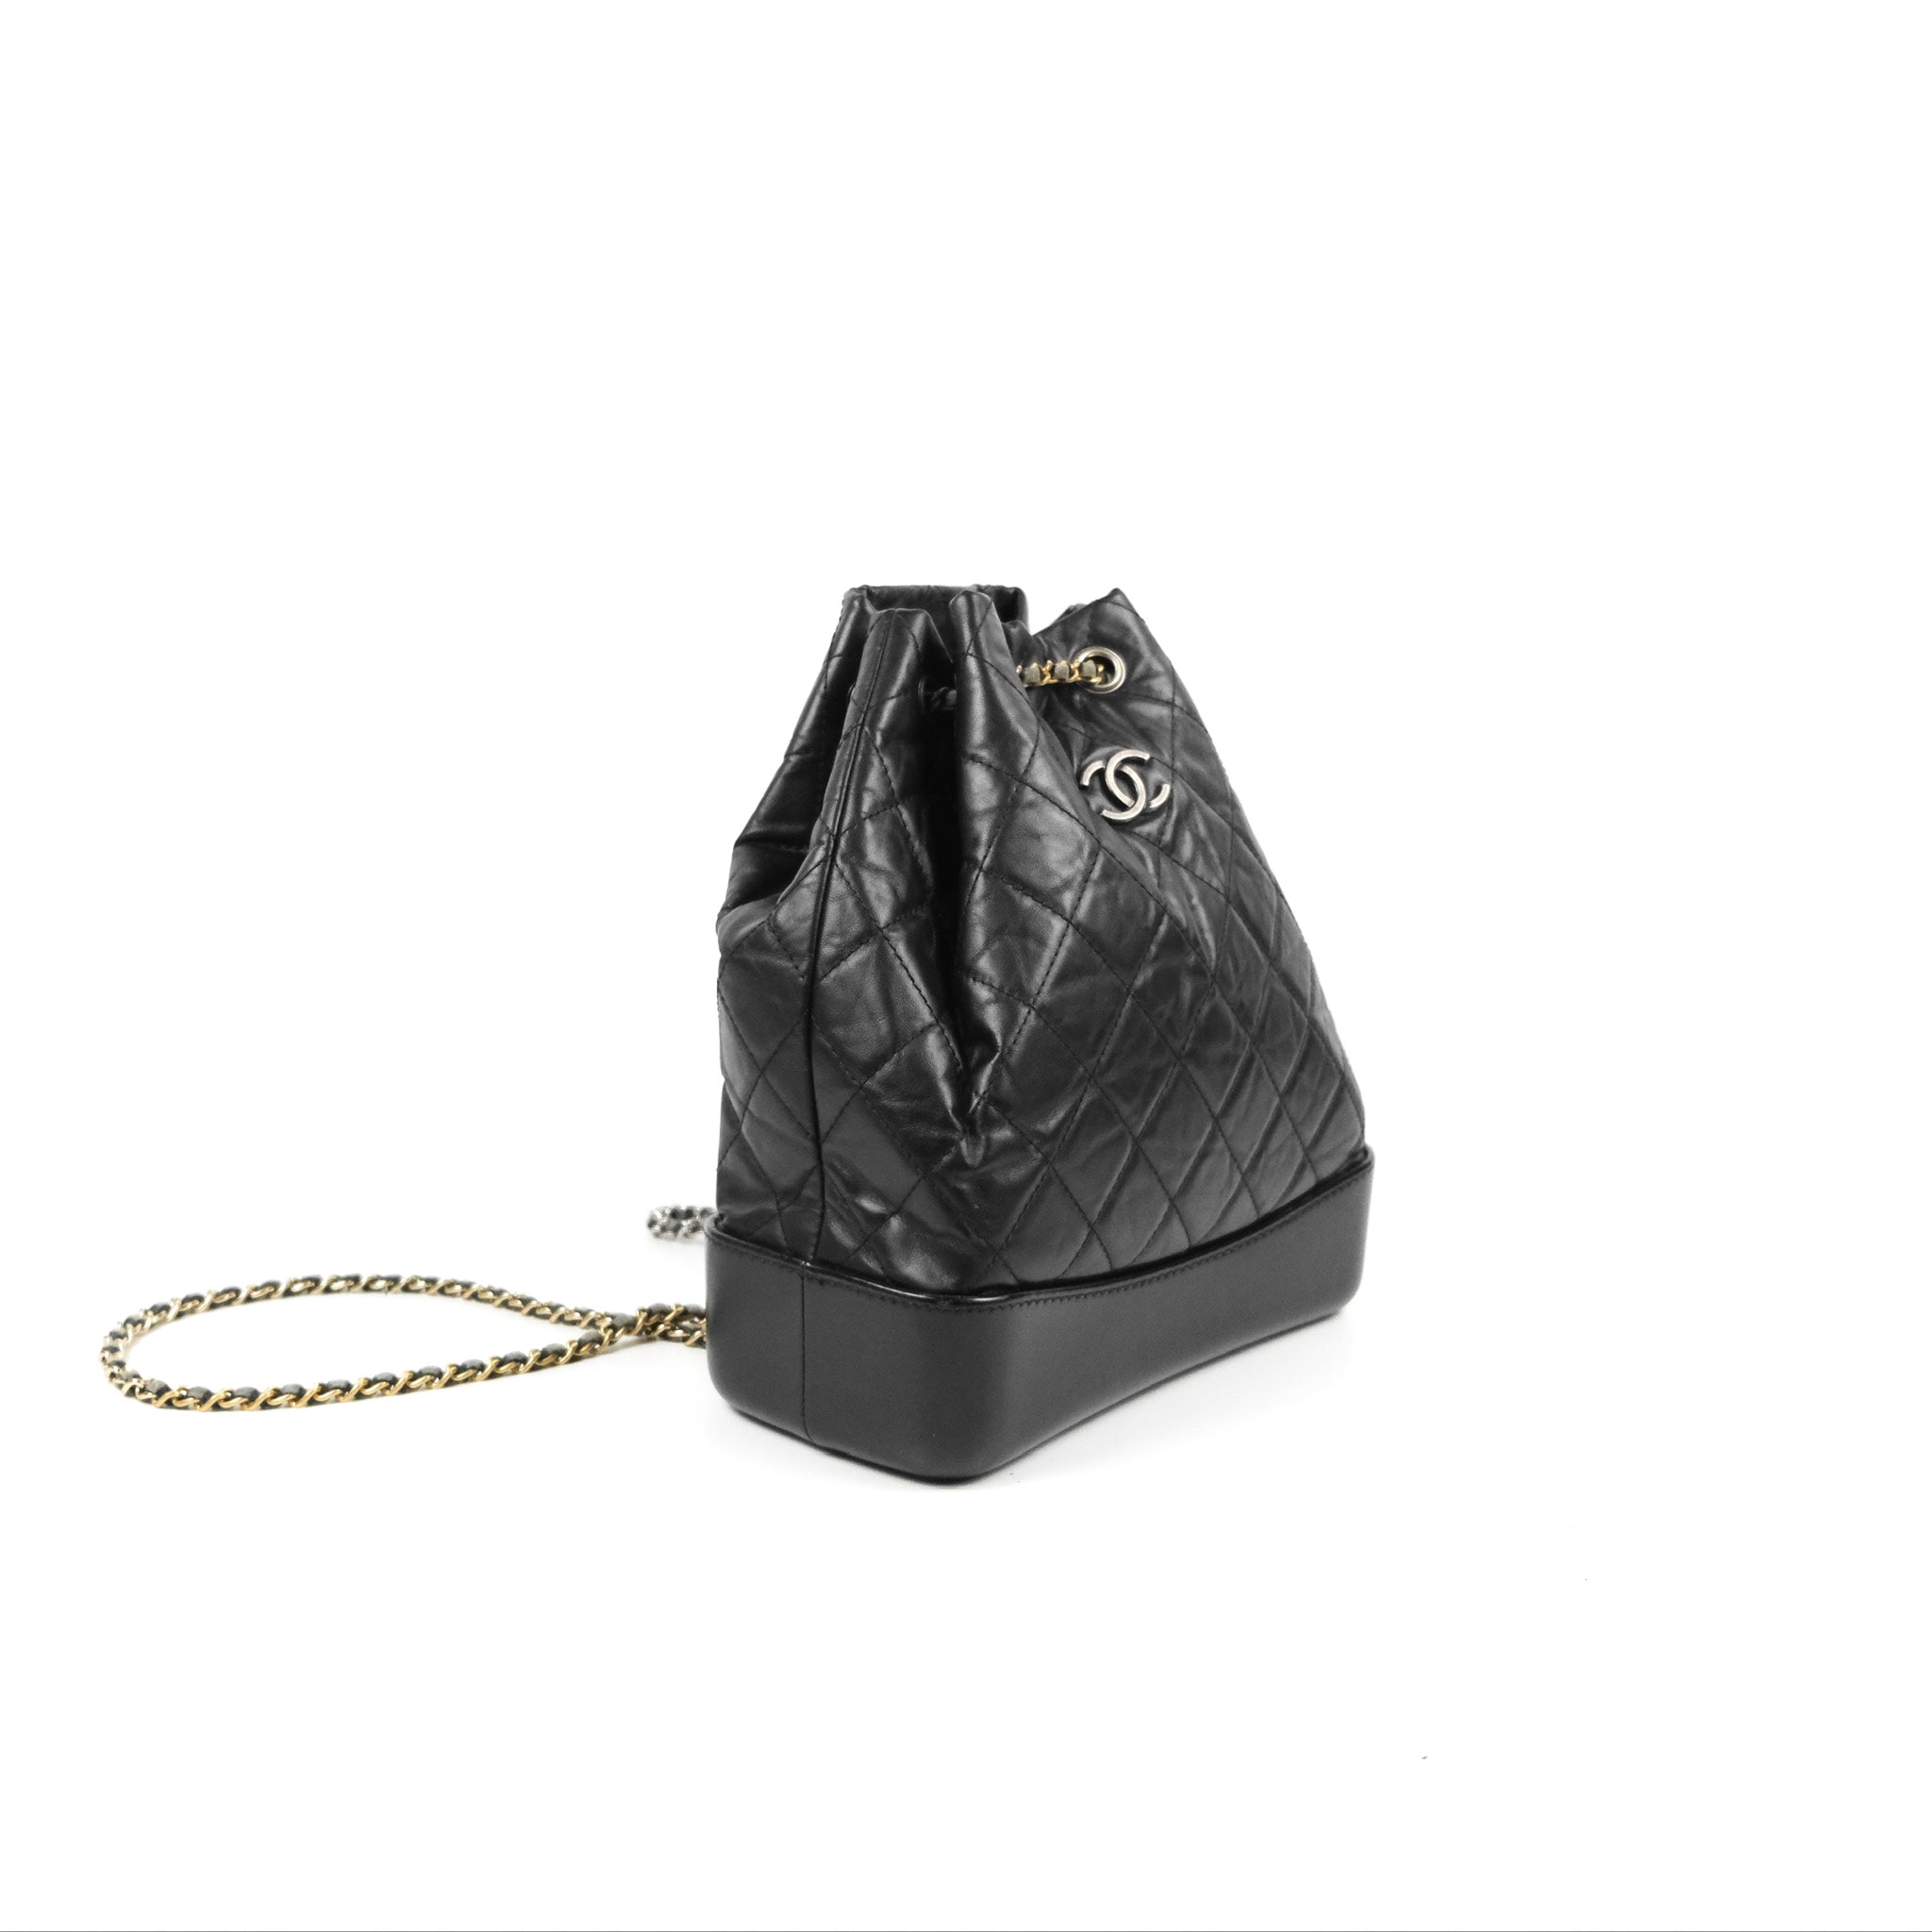 Chanel Medium Gabrielle Backpack Black Aged Calfskin – Coco